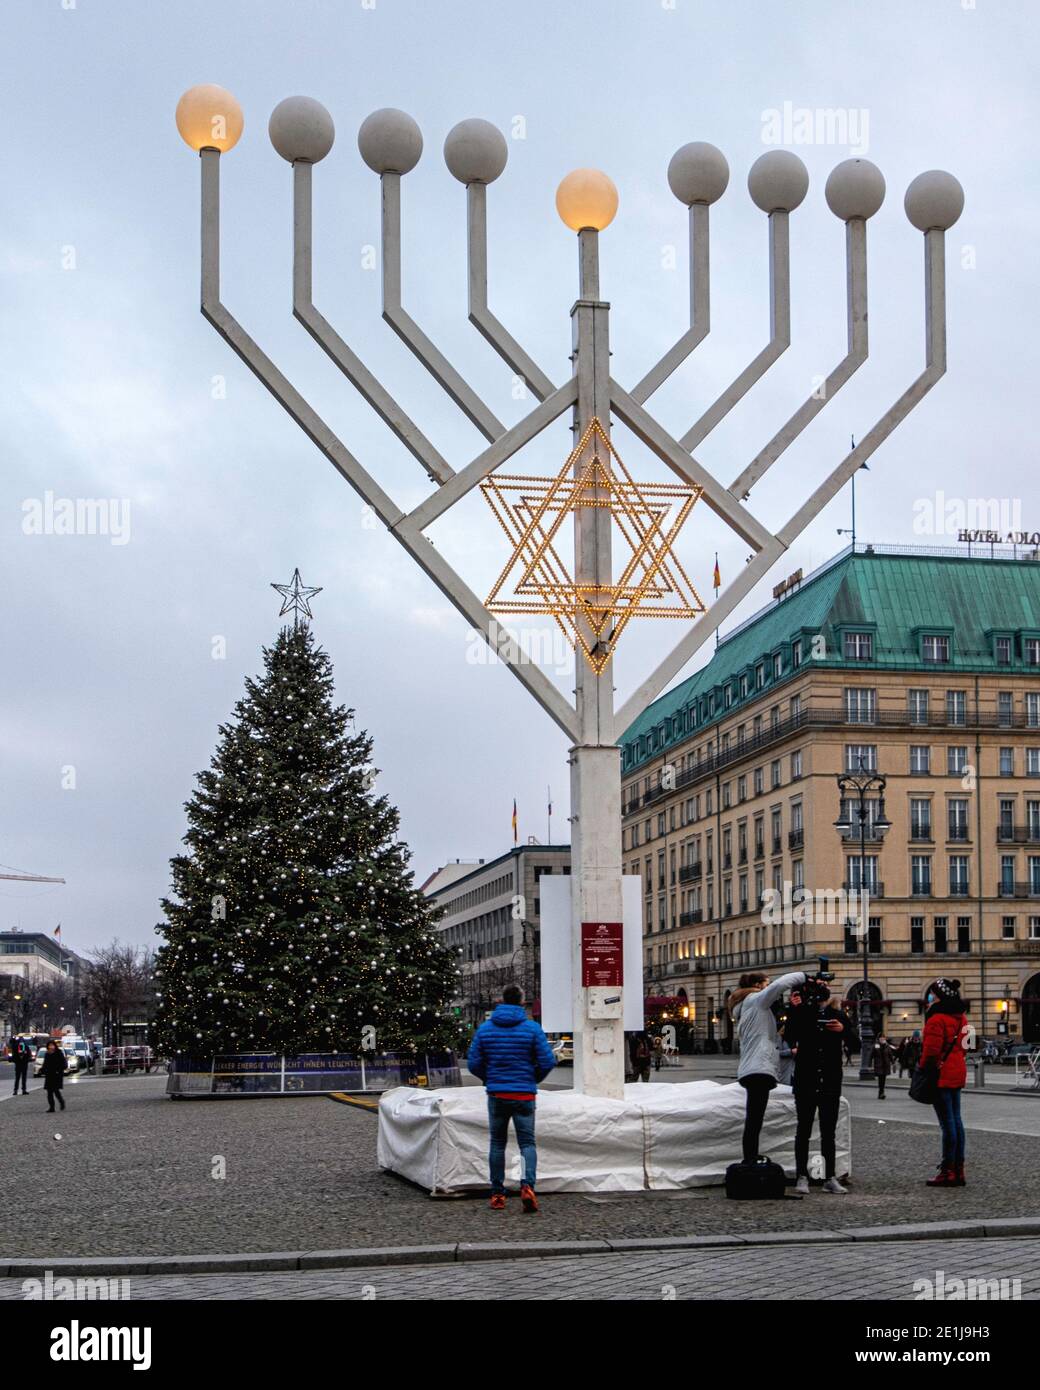 Albero di Natale e Hanukkah Menorah Candelabra di fronte al Brandeburgo Gate, Mitte, Berlino, Germania Foto Stock